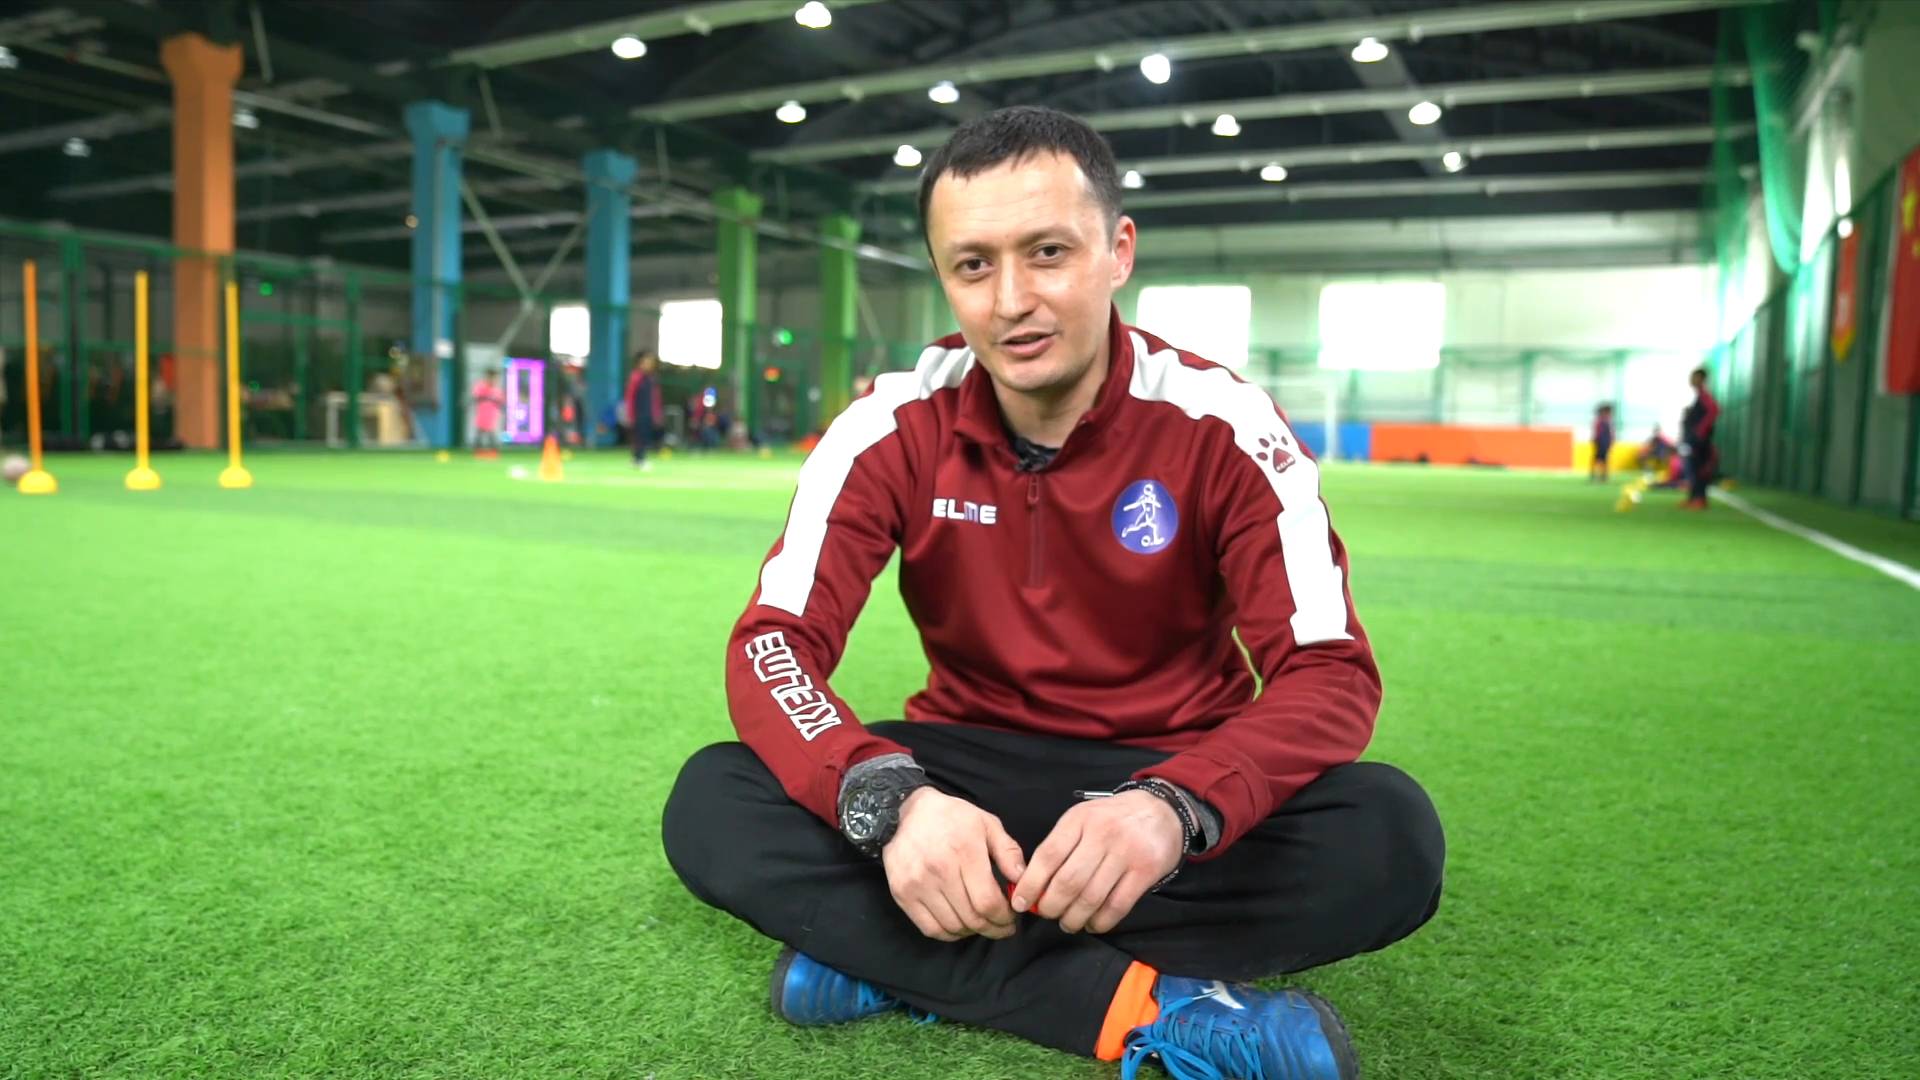 GLOBALink | Xinjiang, My home: Football enthusiasts passing down skills to next generation